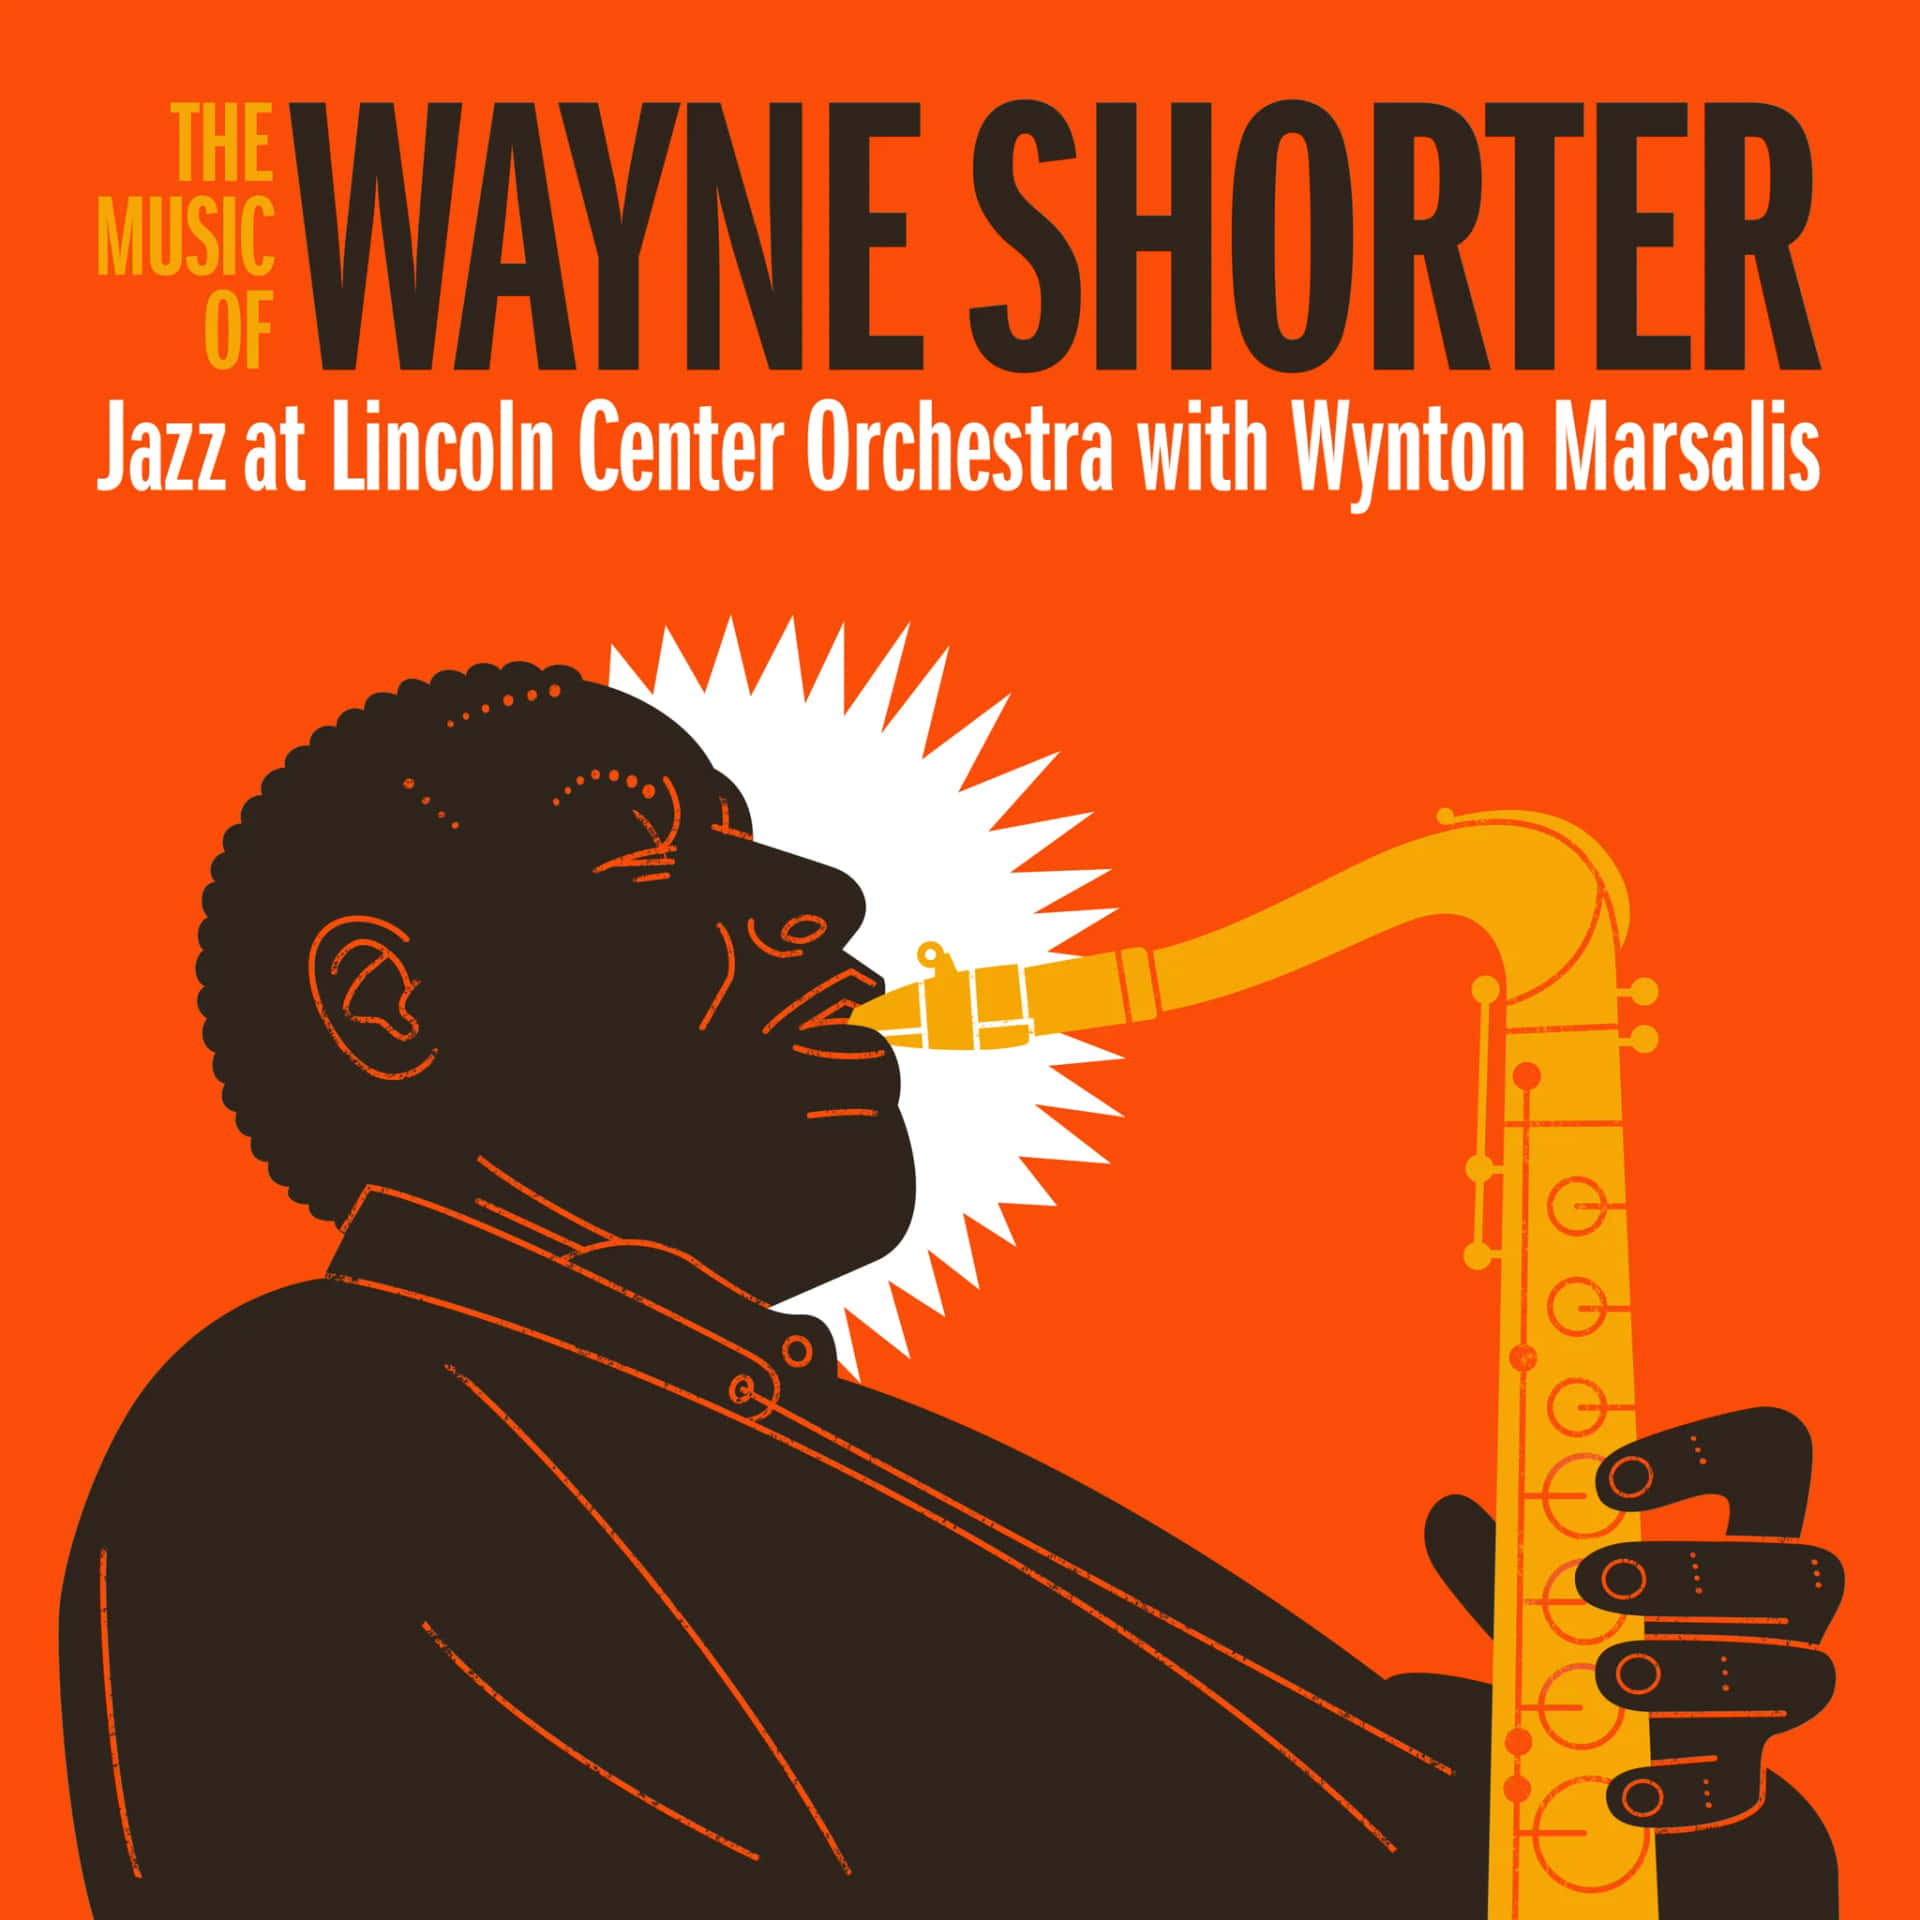 Legendary jazz saxophonist Wayne Shorter performing on stage Wallpaper